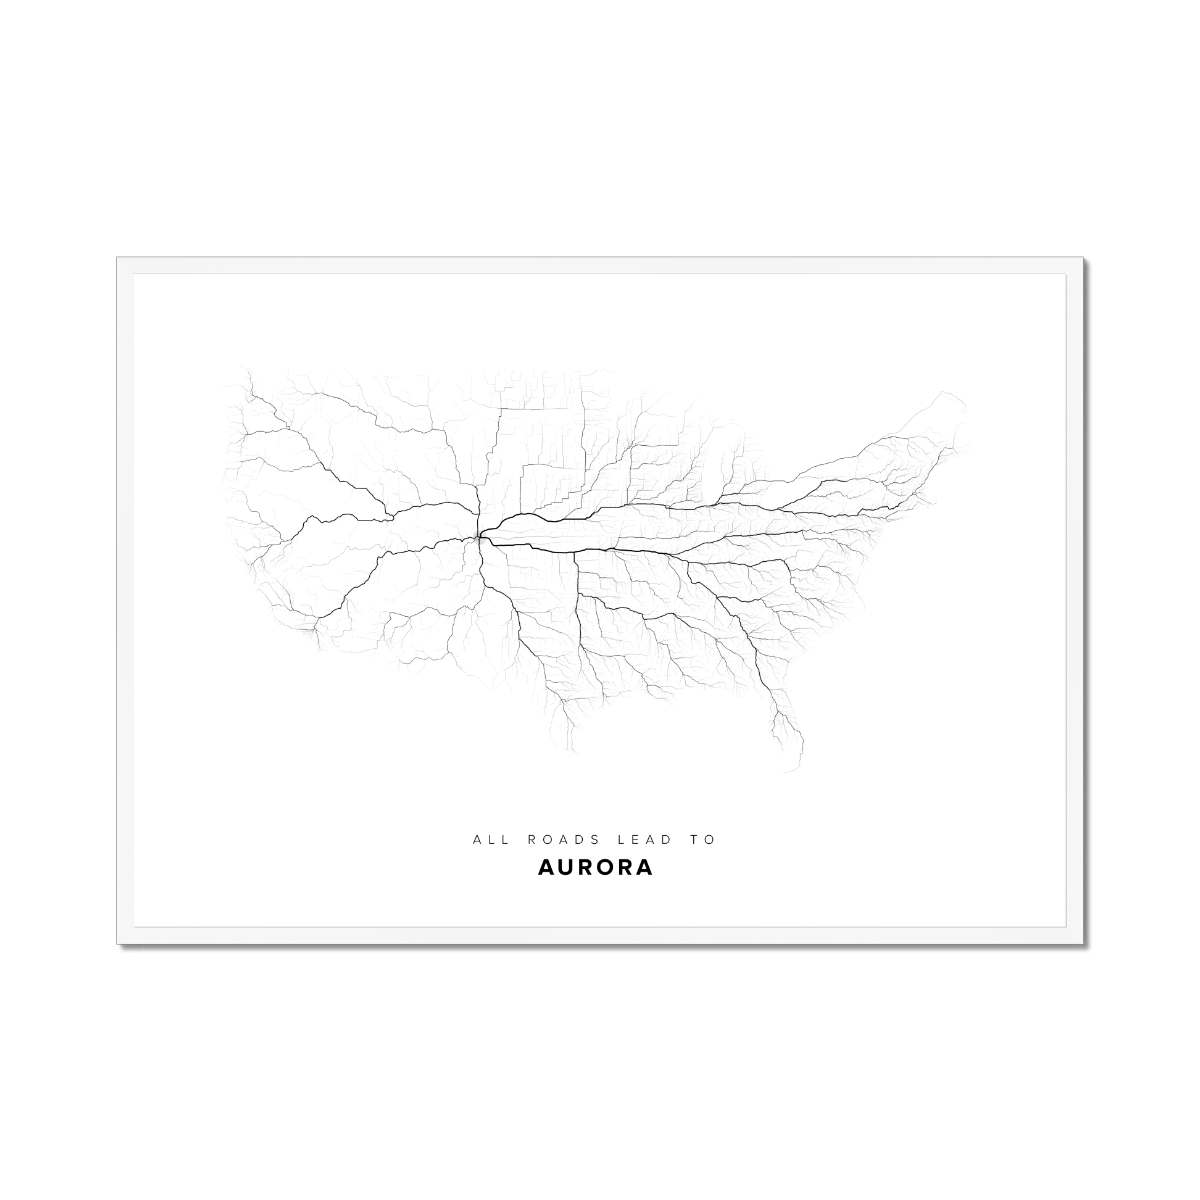 All roads lead to Aurora (United States of America) Fine Art Map Print